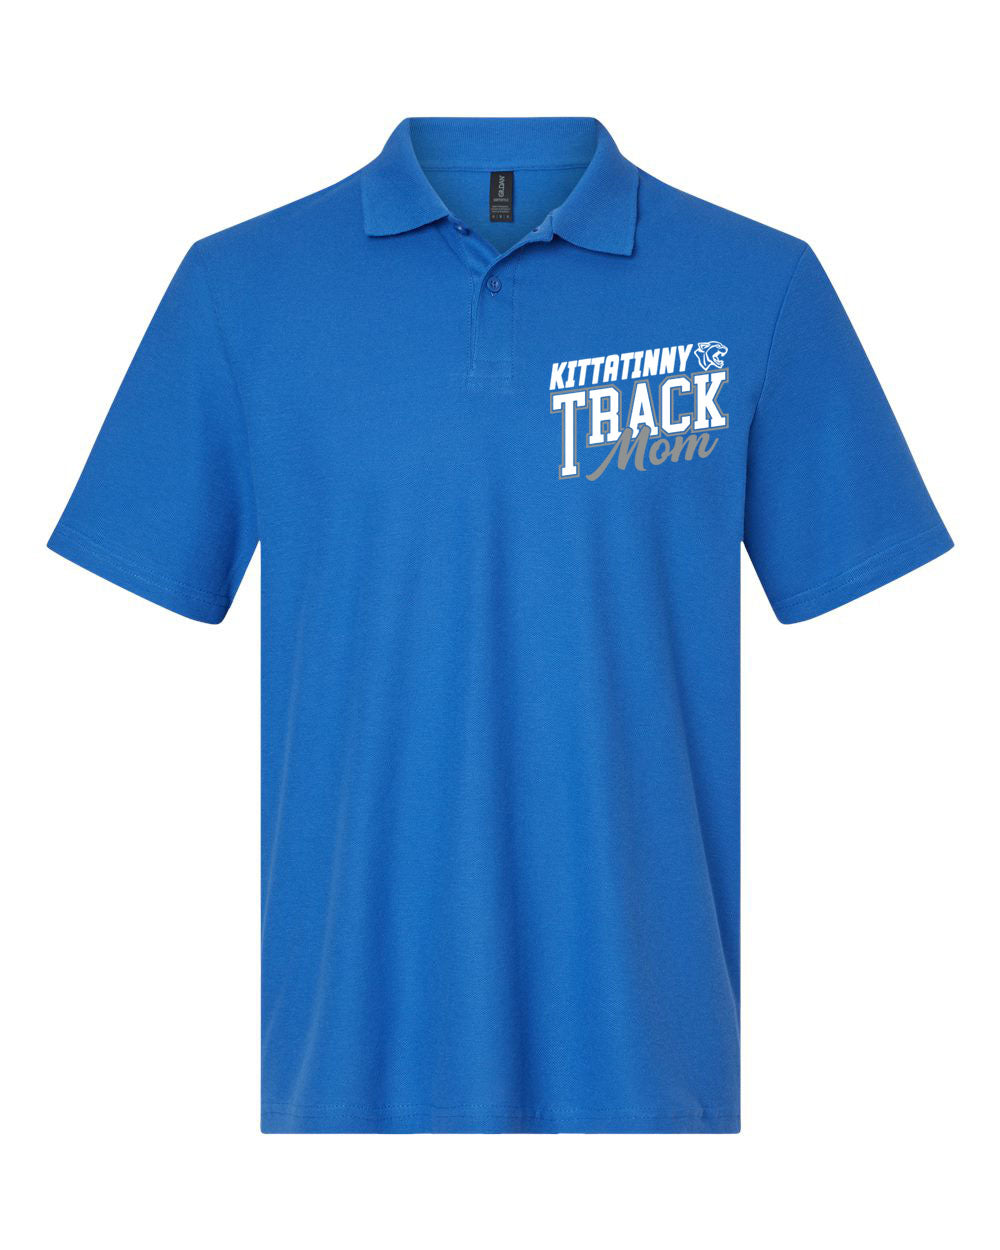 Kittatinny Track Design 4 Polo T-Shirt